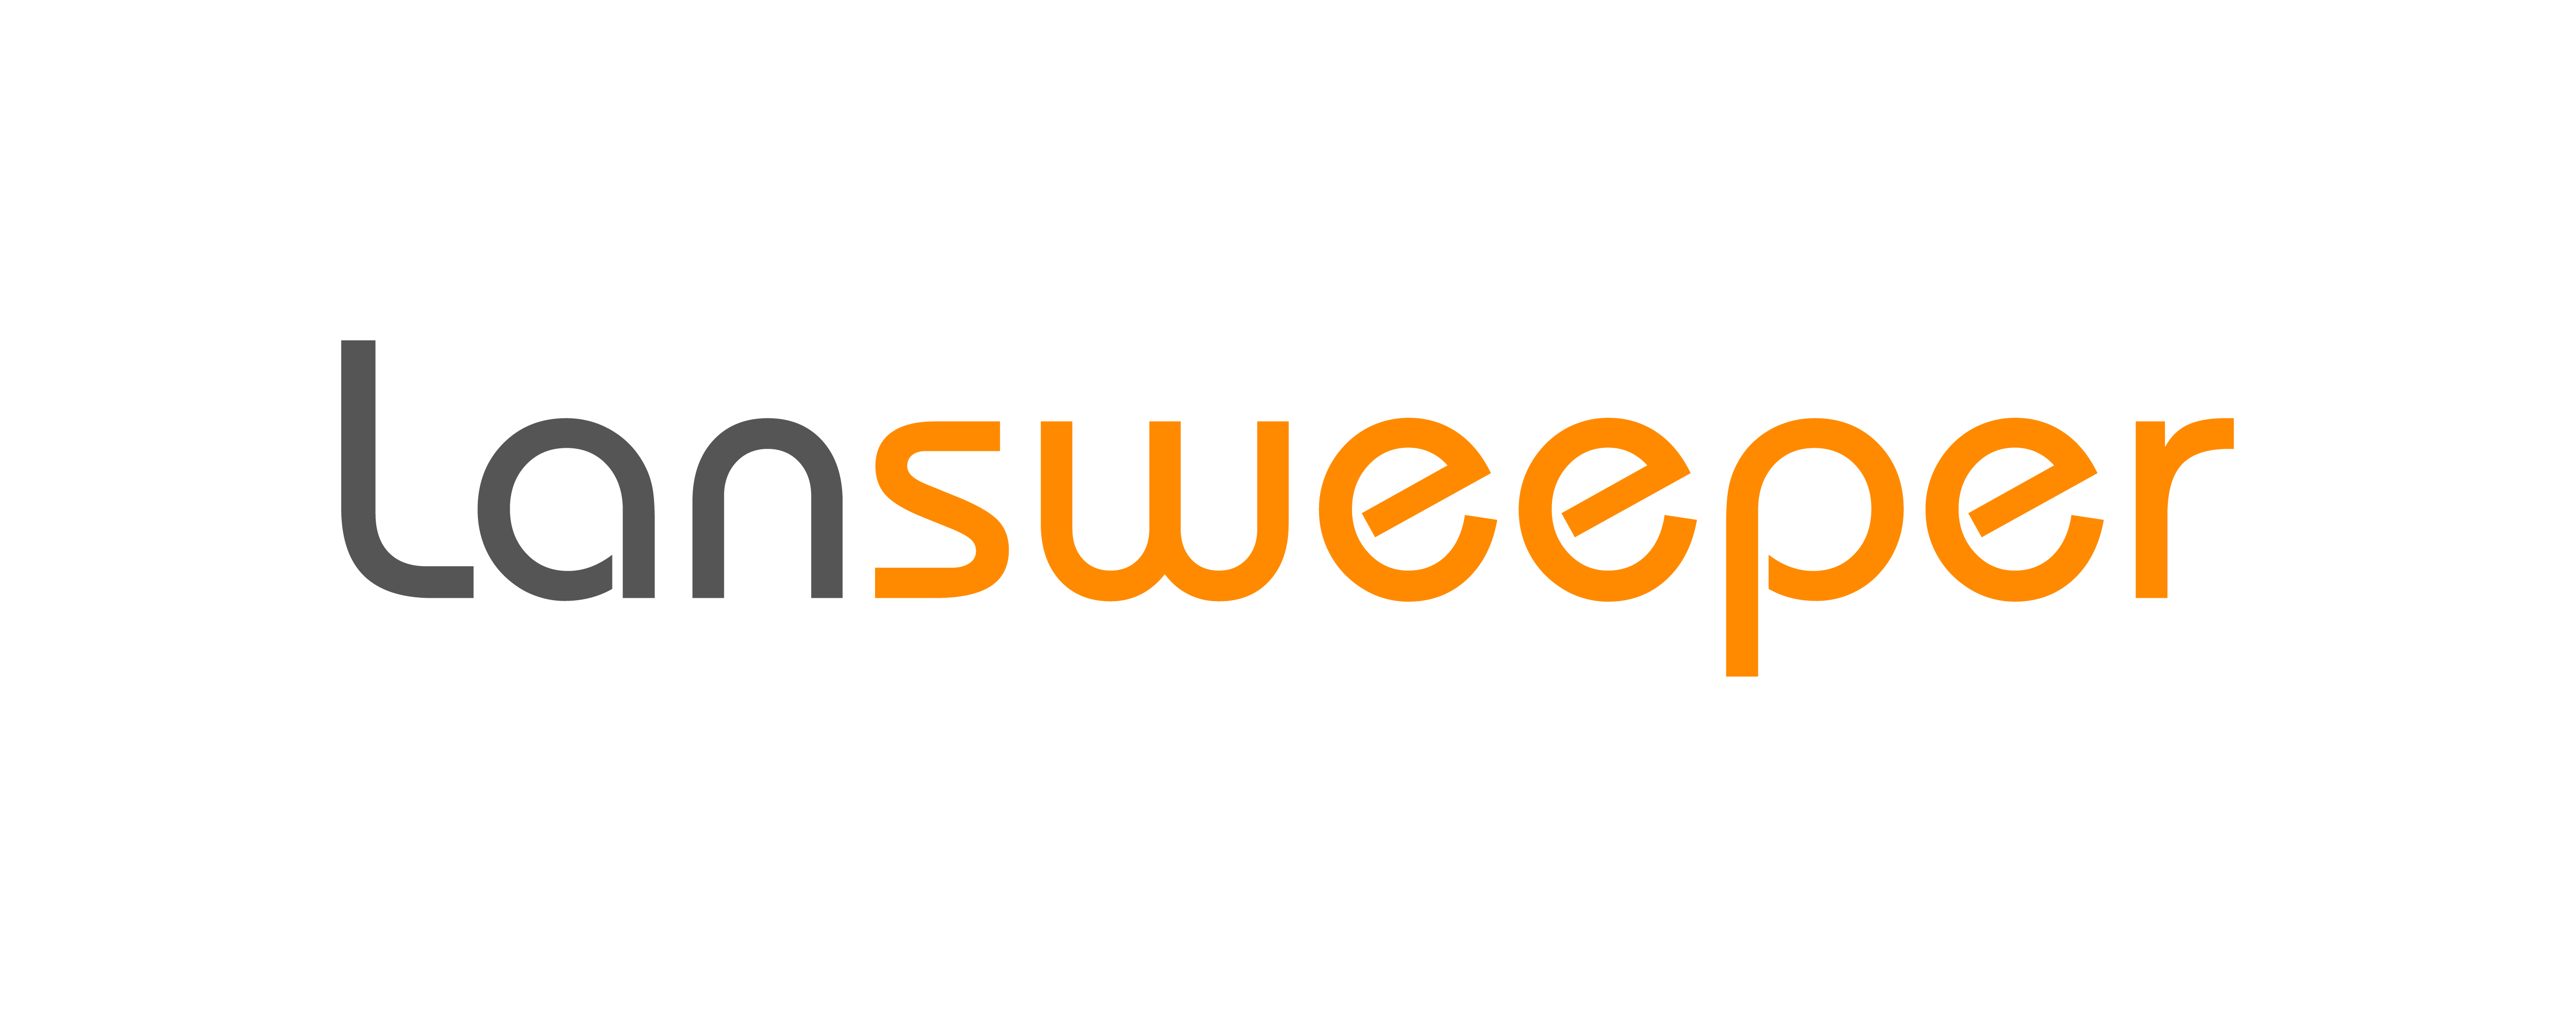 Lansweeper-Full-Logo-Grey-01